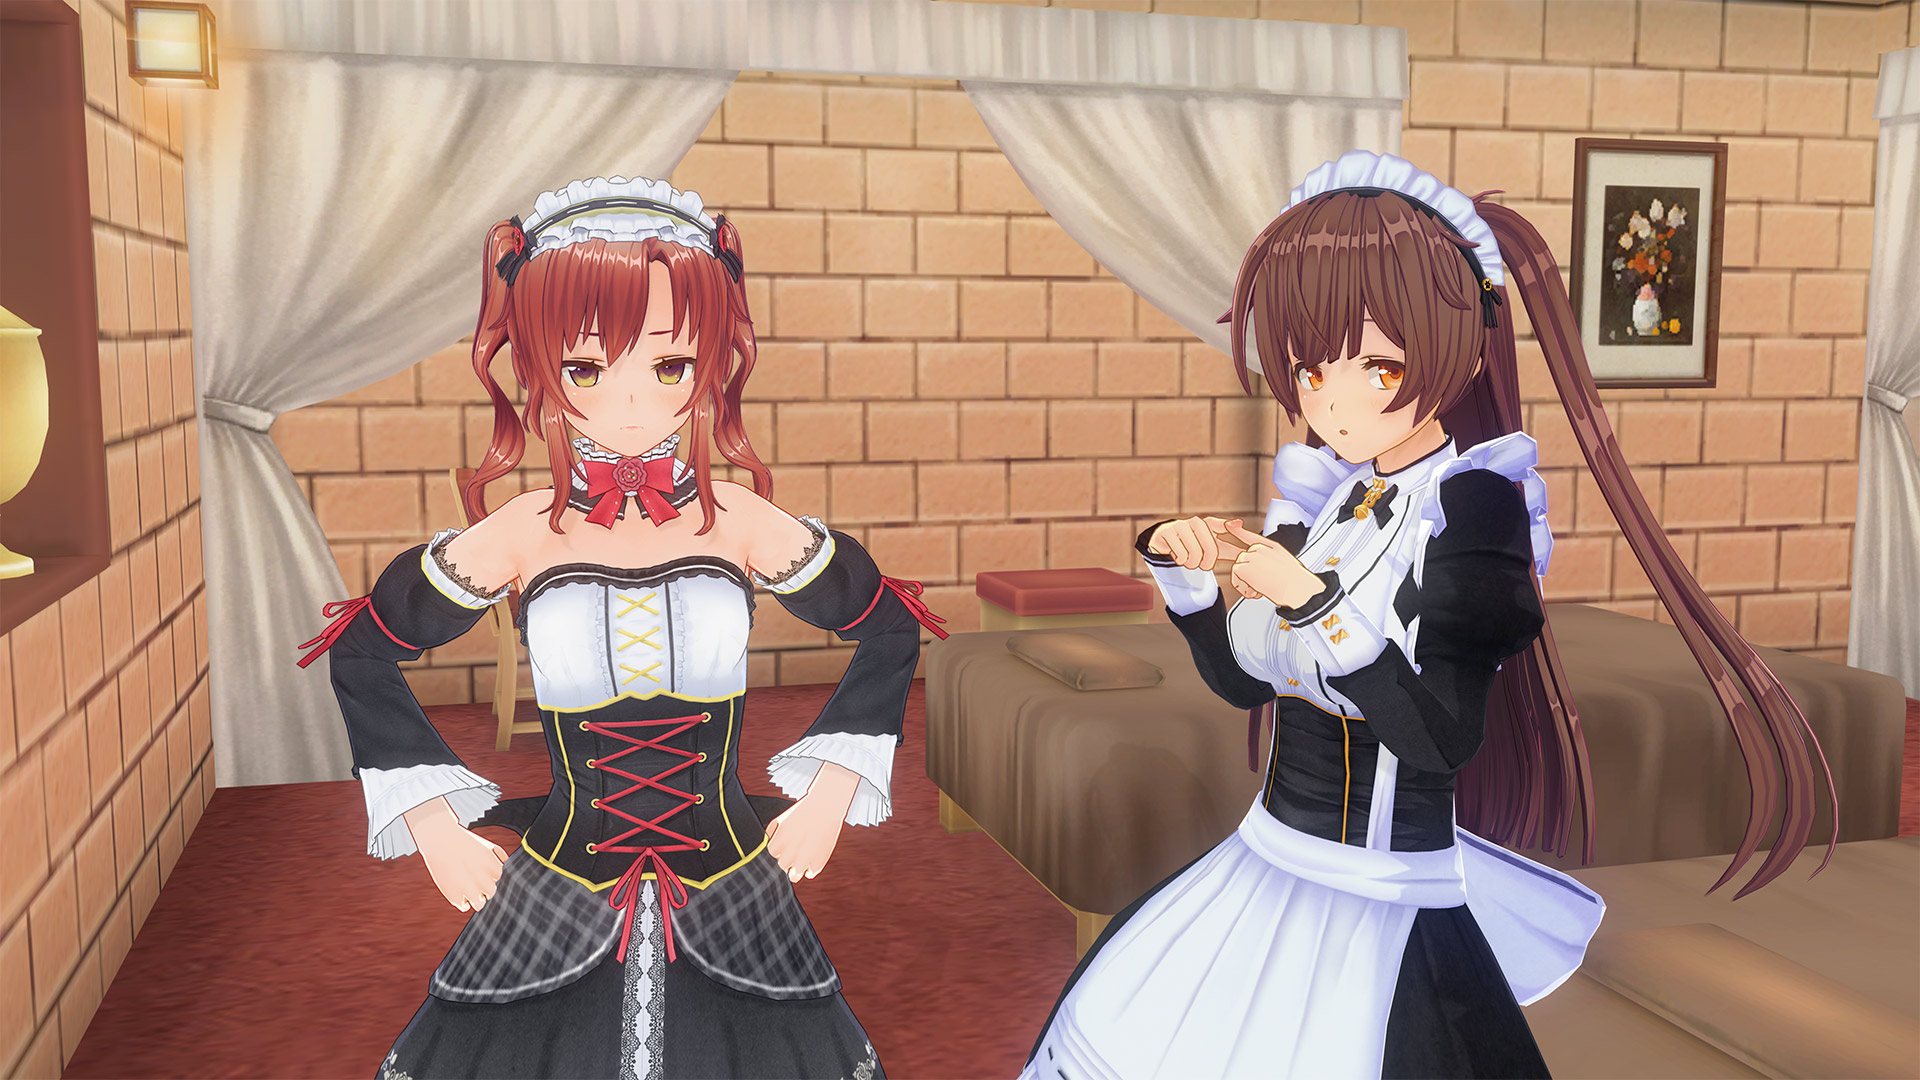 custom maid 3d 2 gameplay